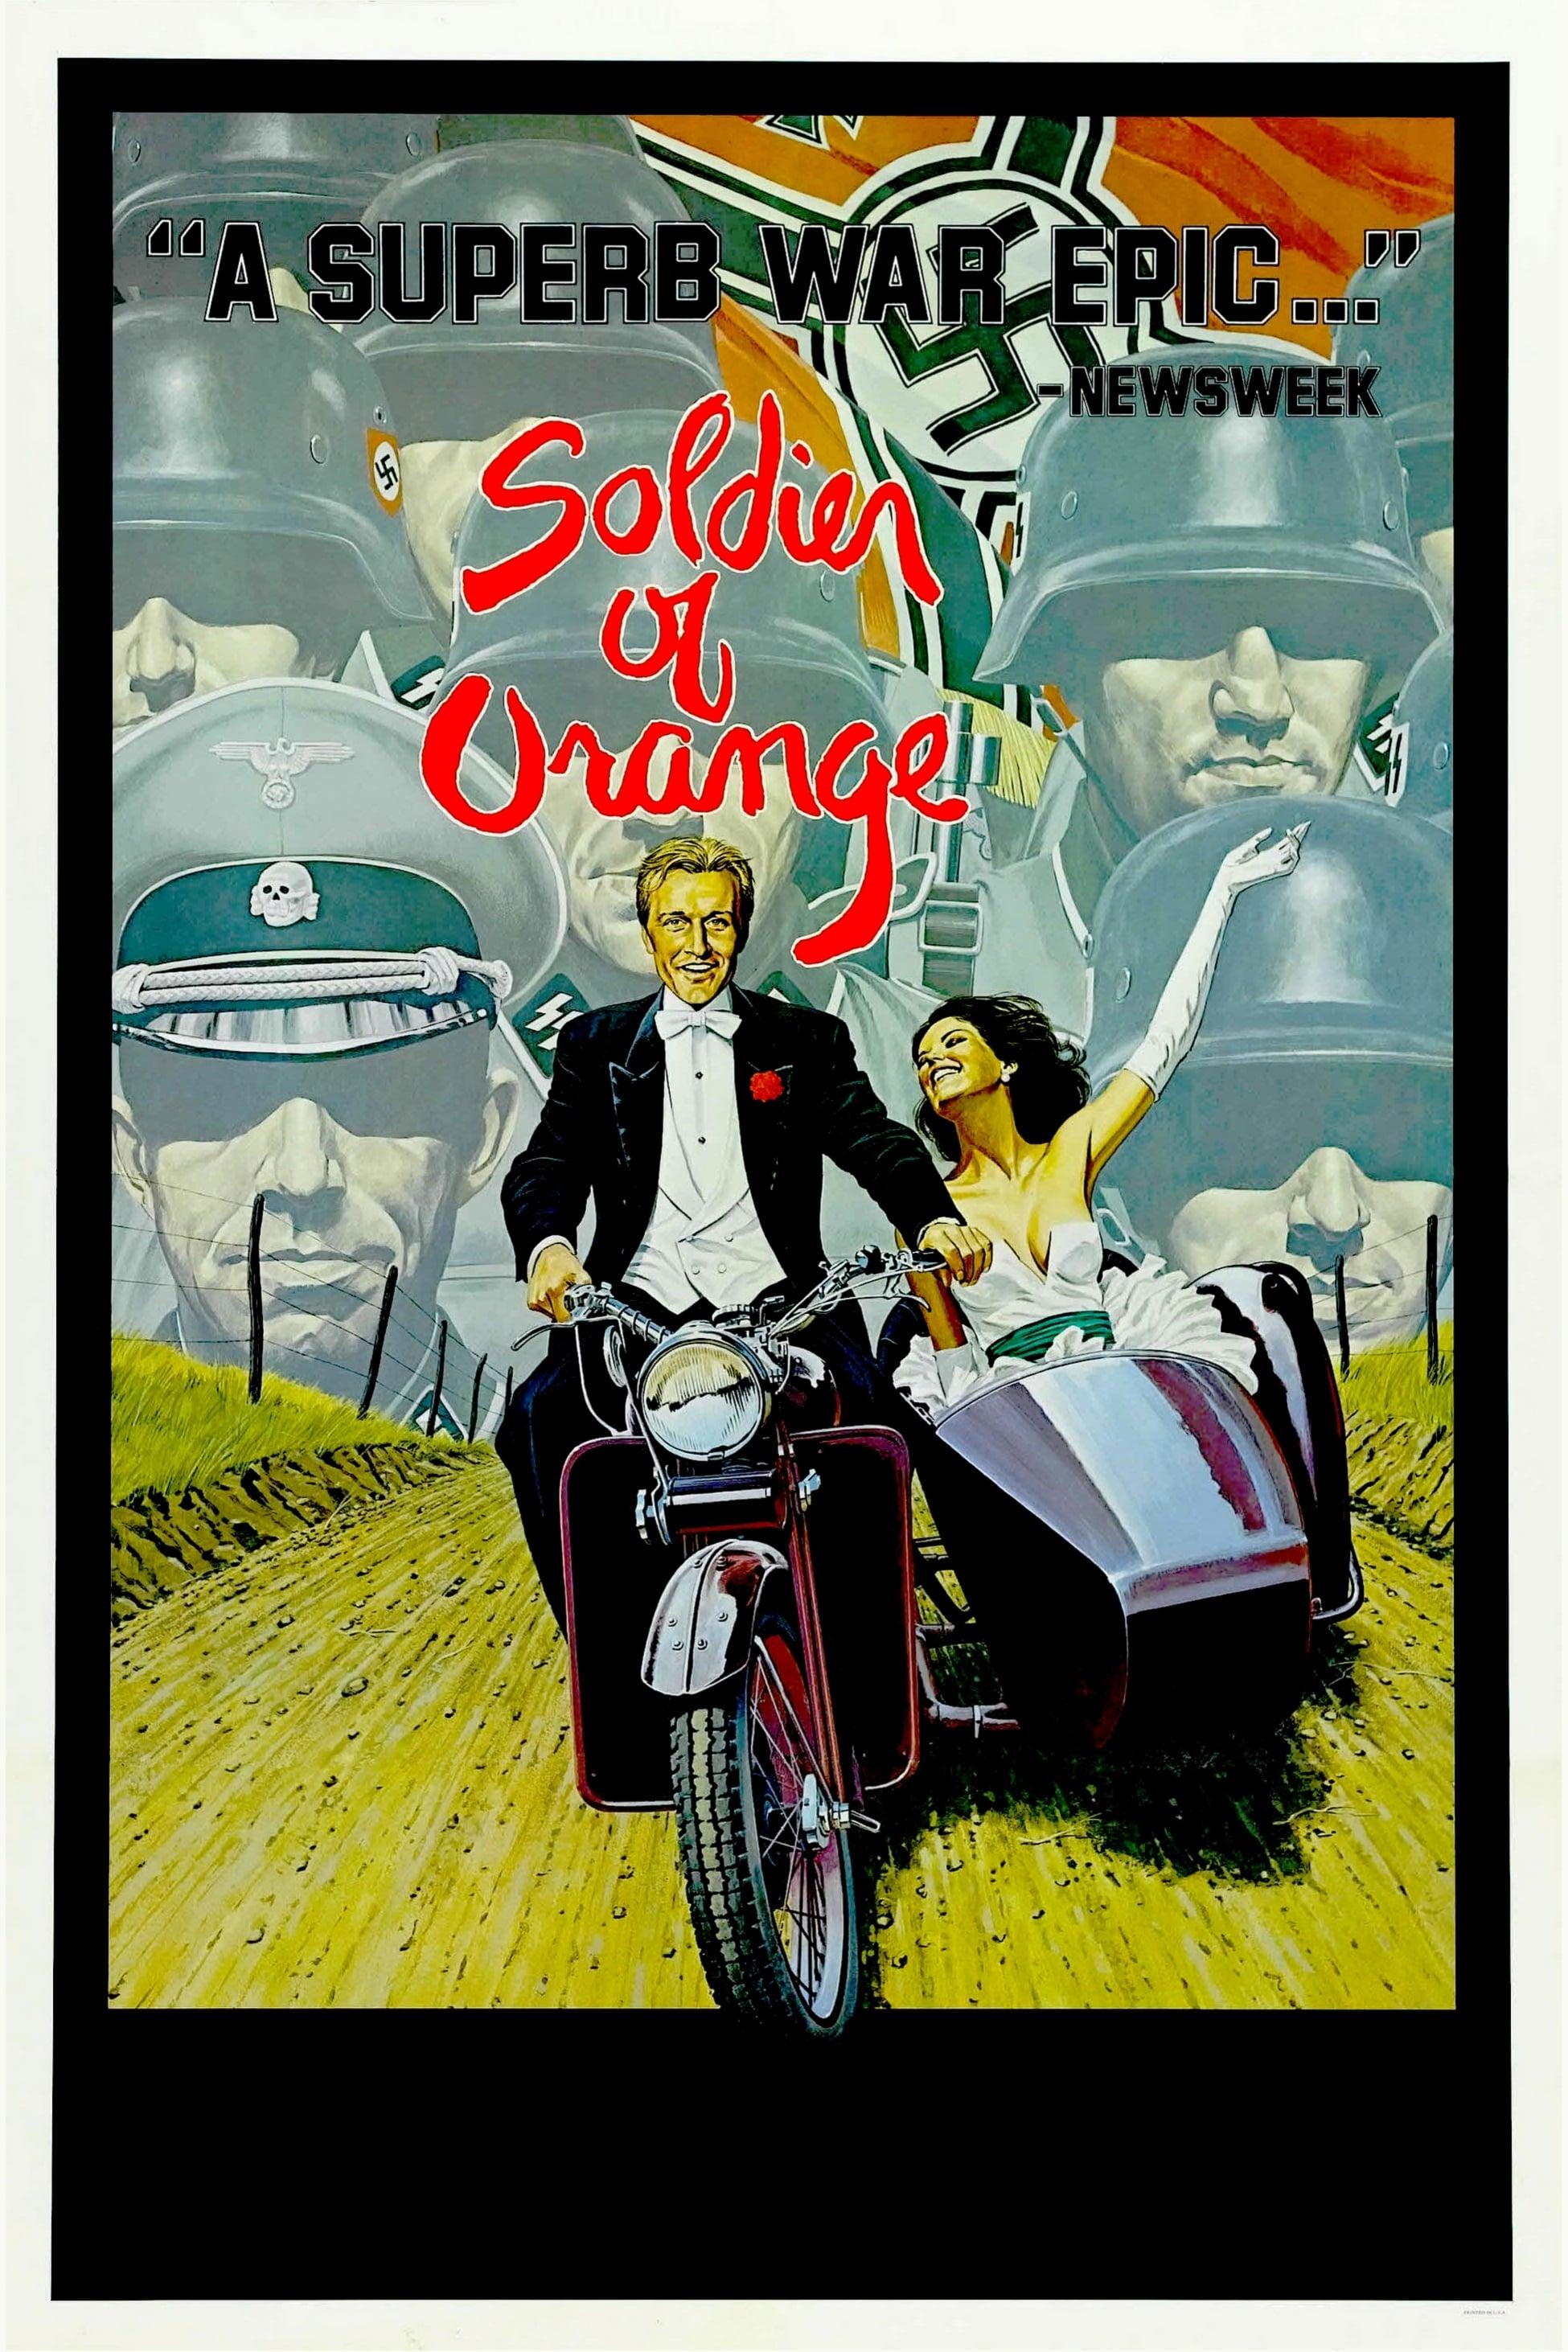 Soldier of Orange poster